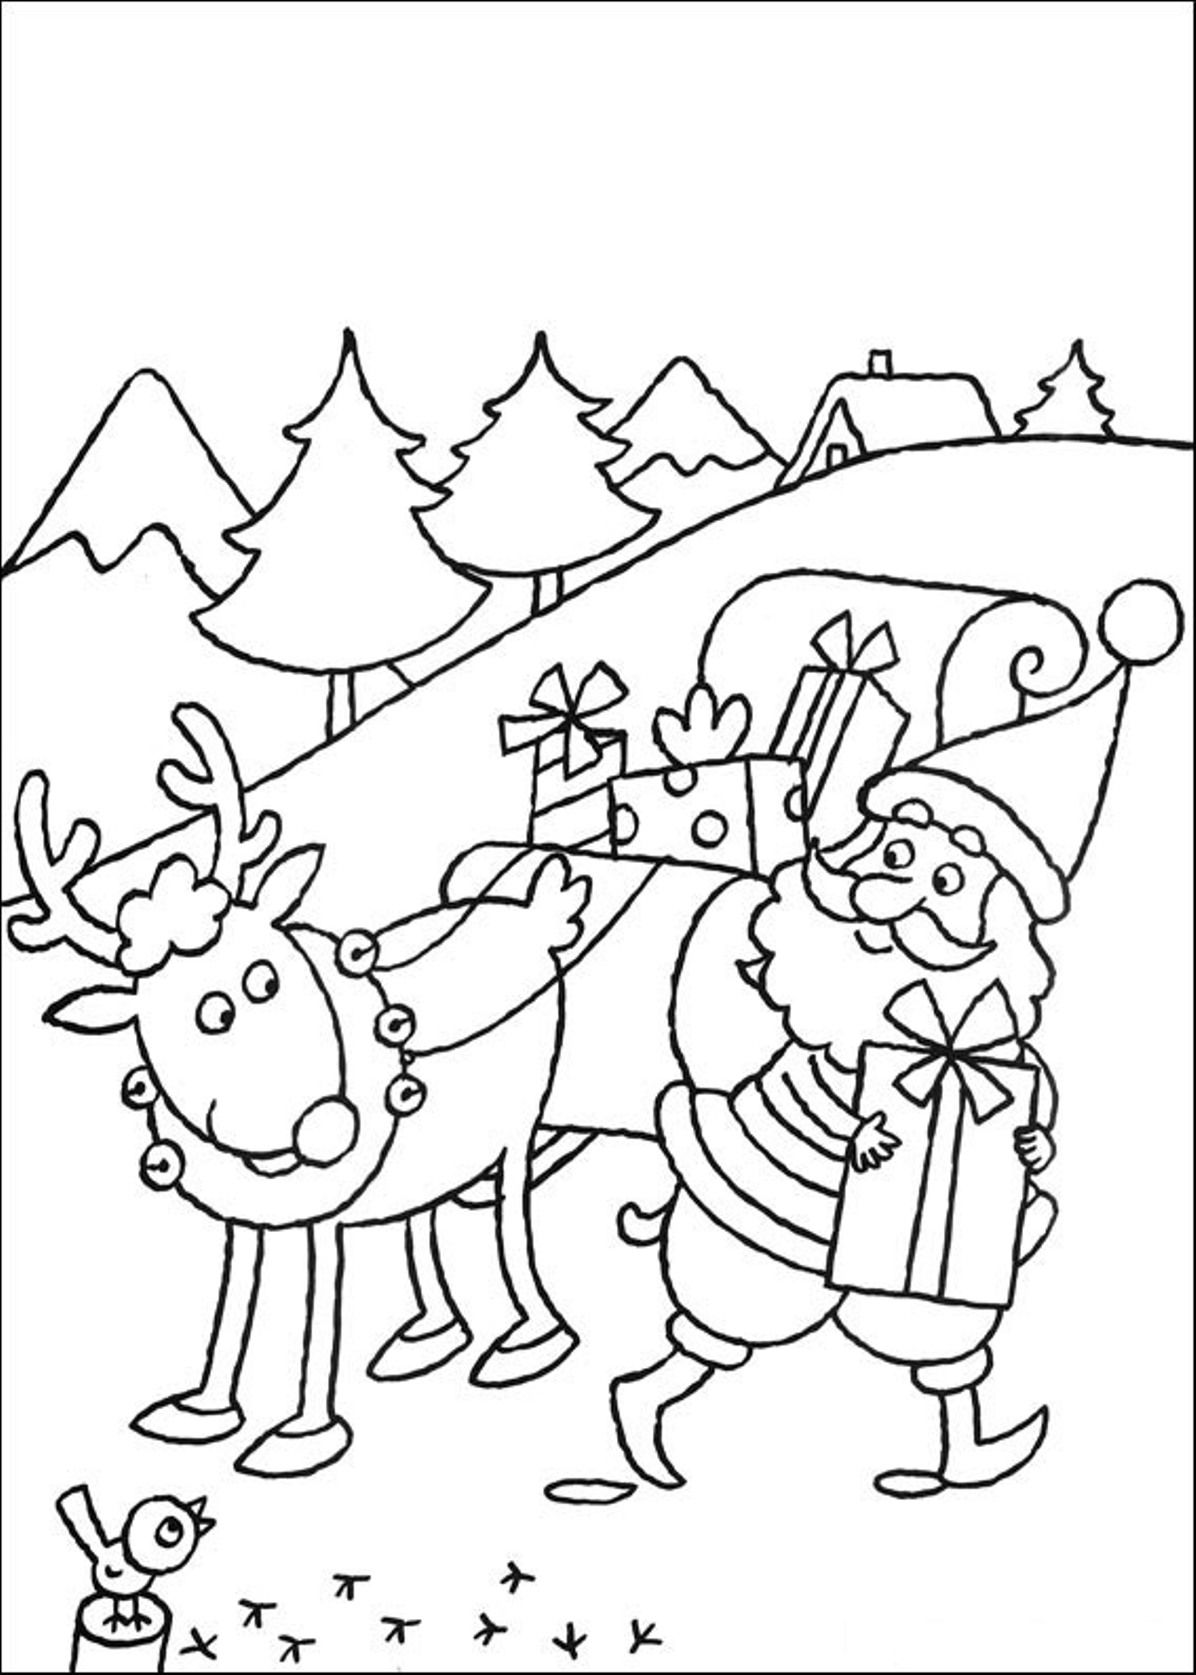 Coloring Pages Of Santa S 9 Reindeer - Coloring